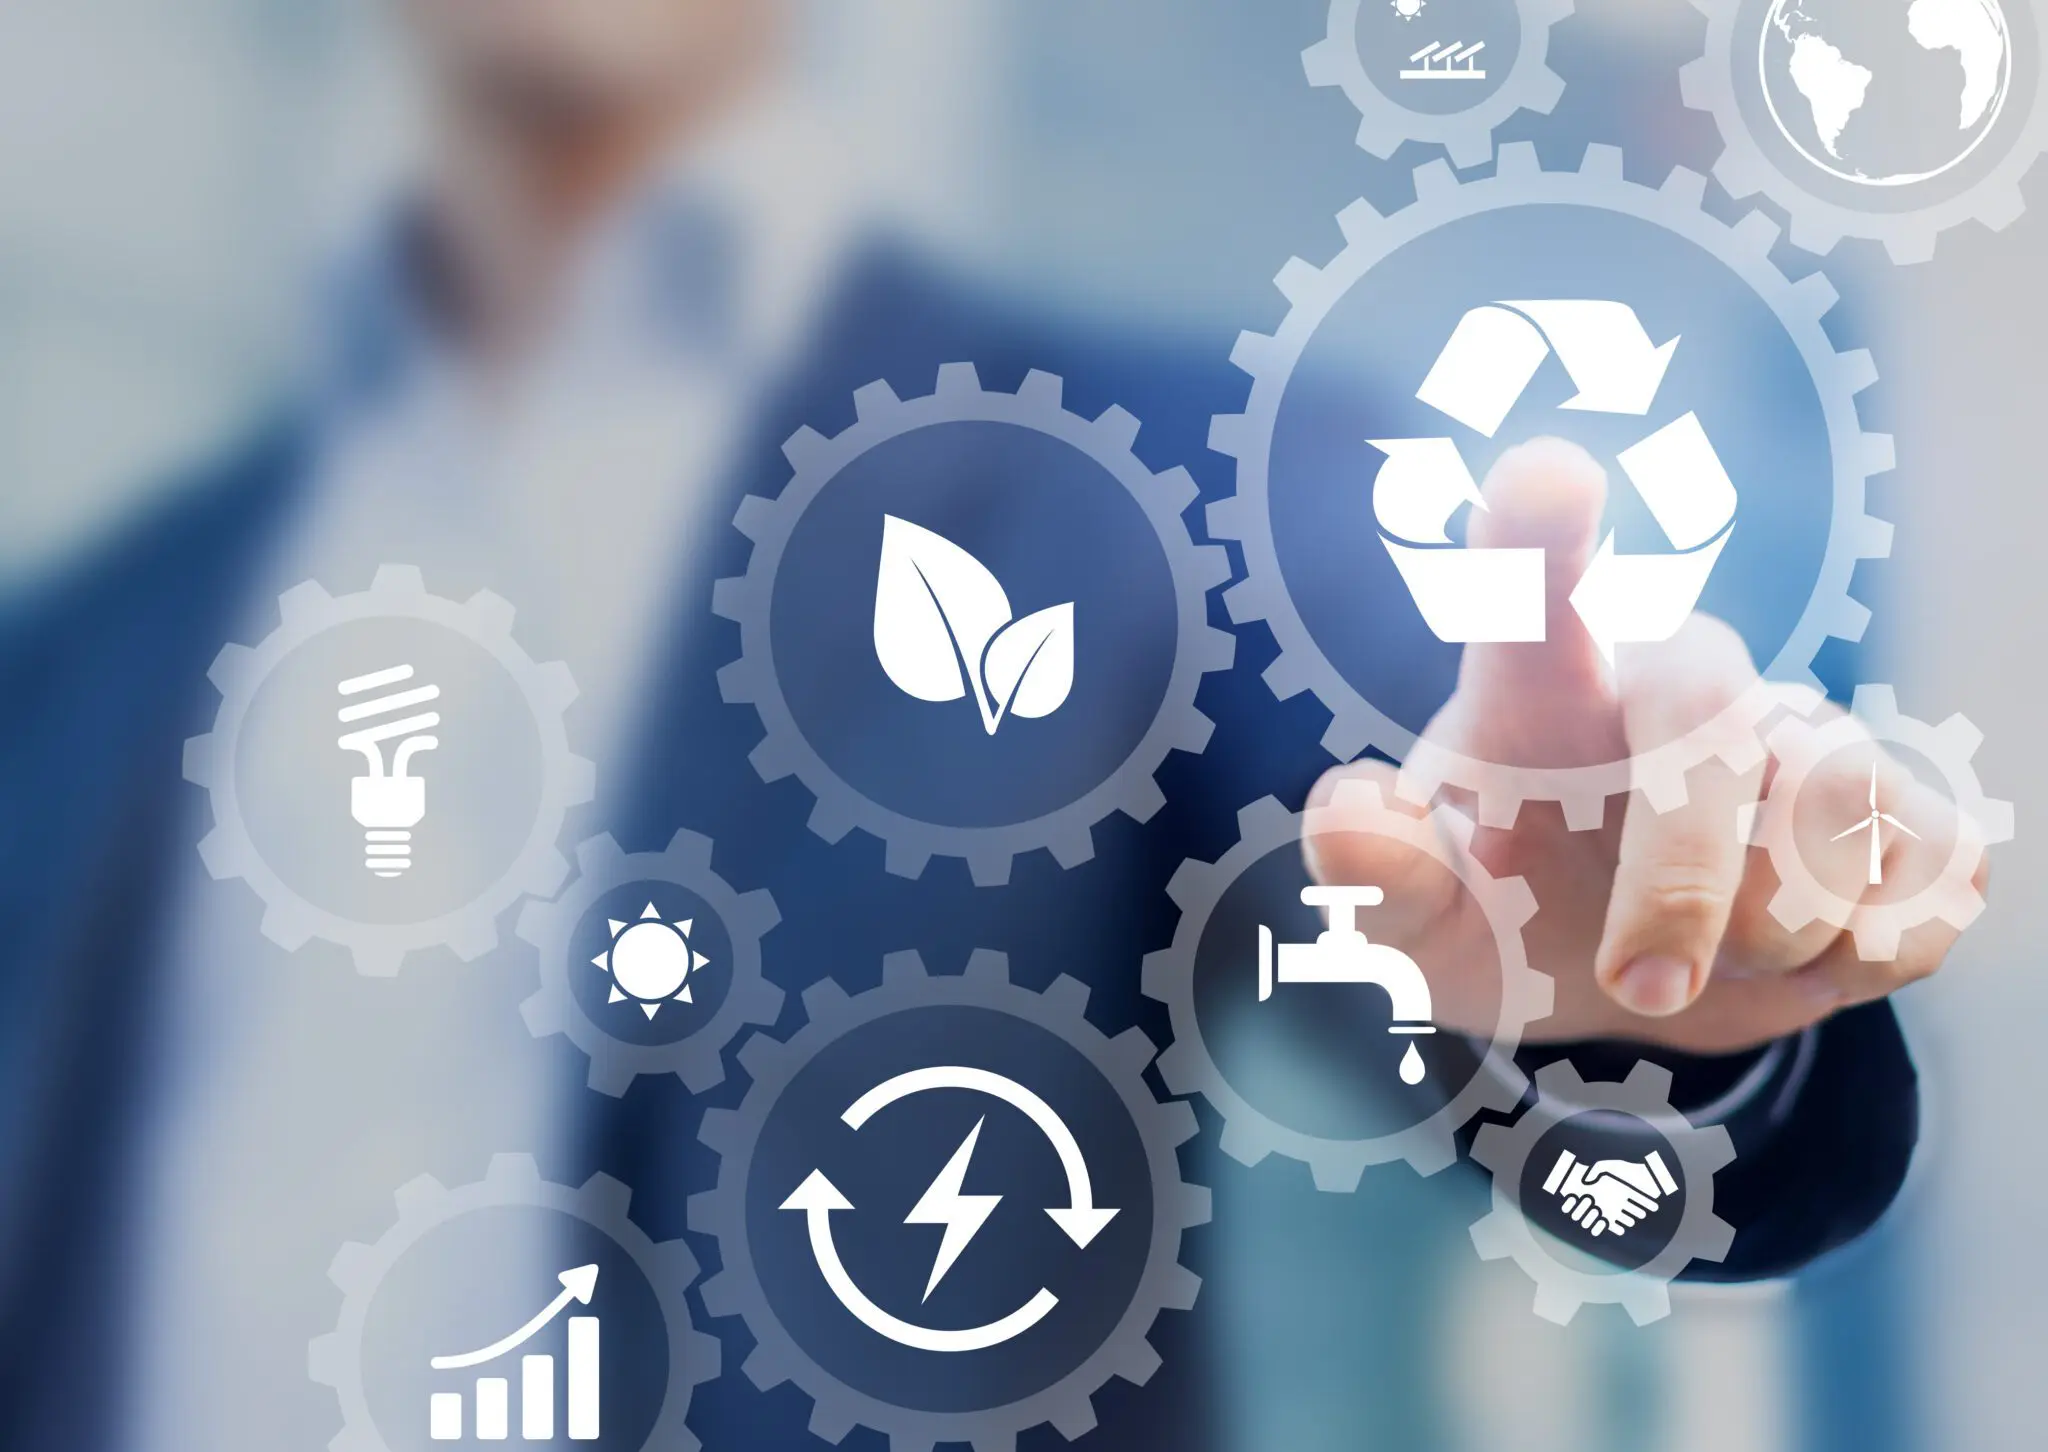 Can AV Help Enterprises Achieve Sustainability Goals?